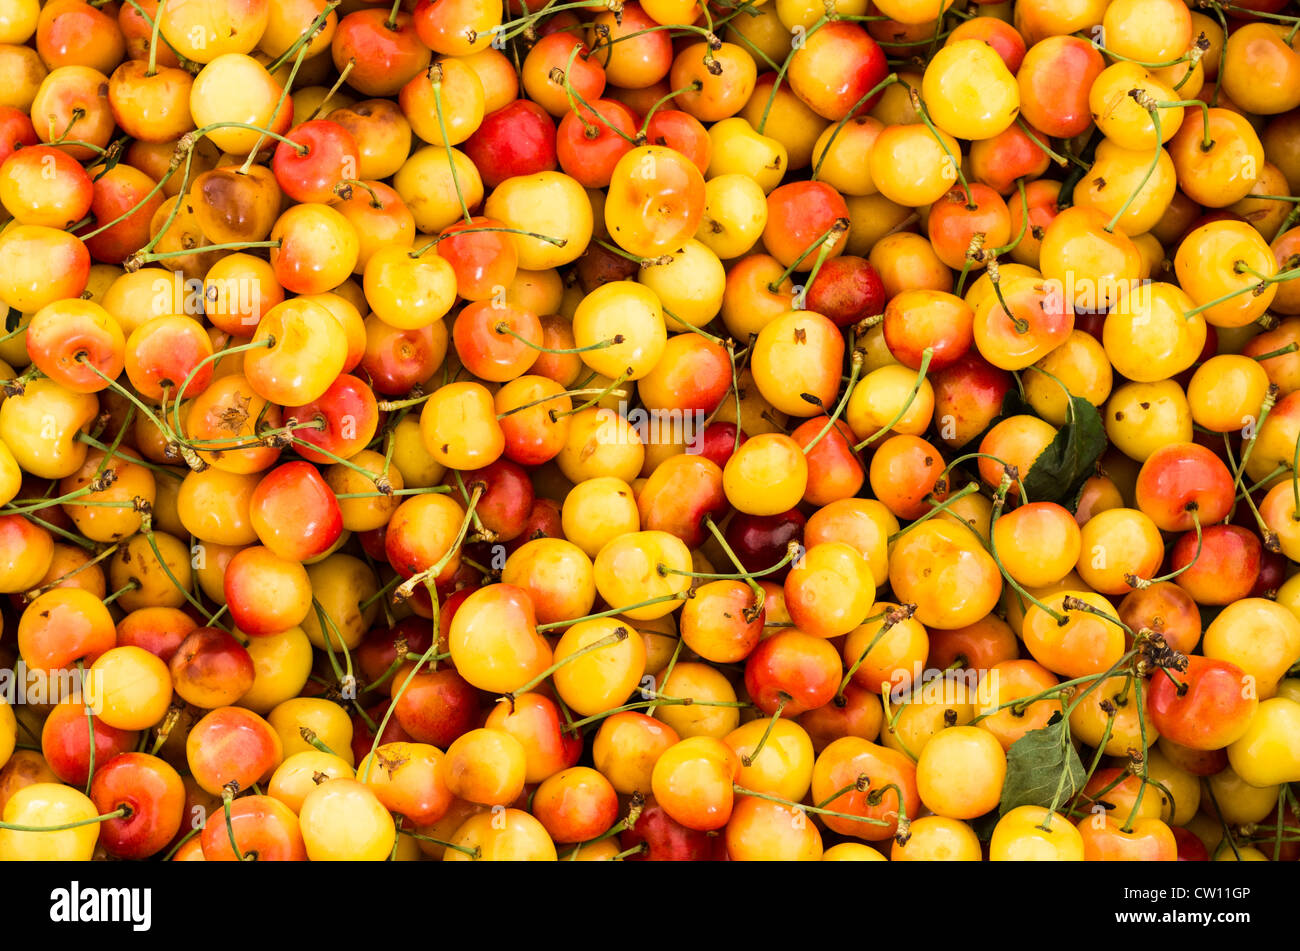 Fresh ripe Rainier cherries on display at the farmers market Stock Photo